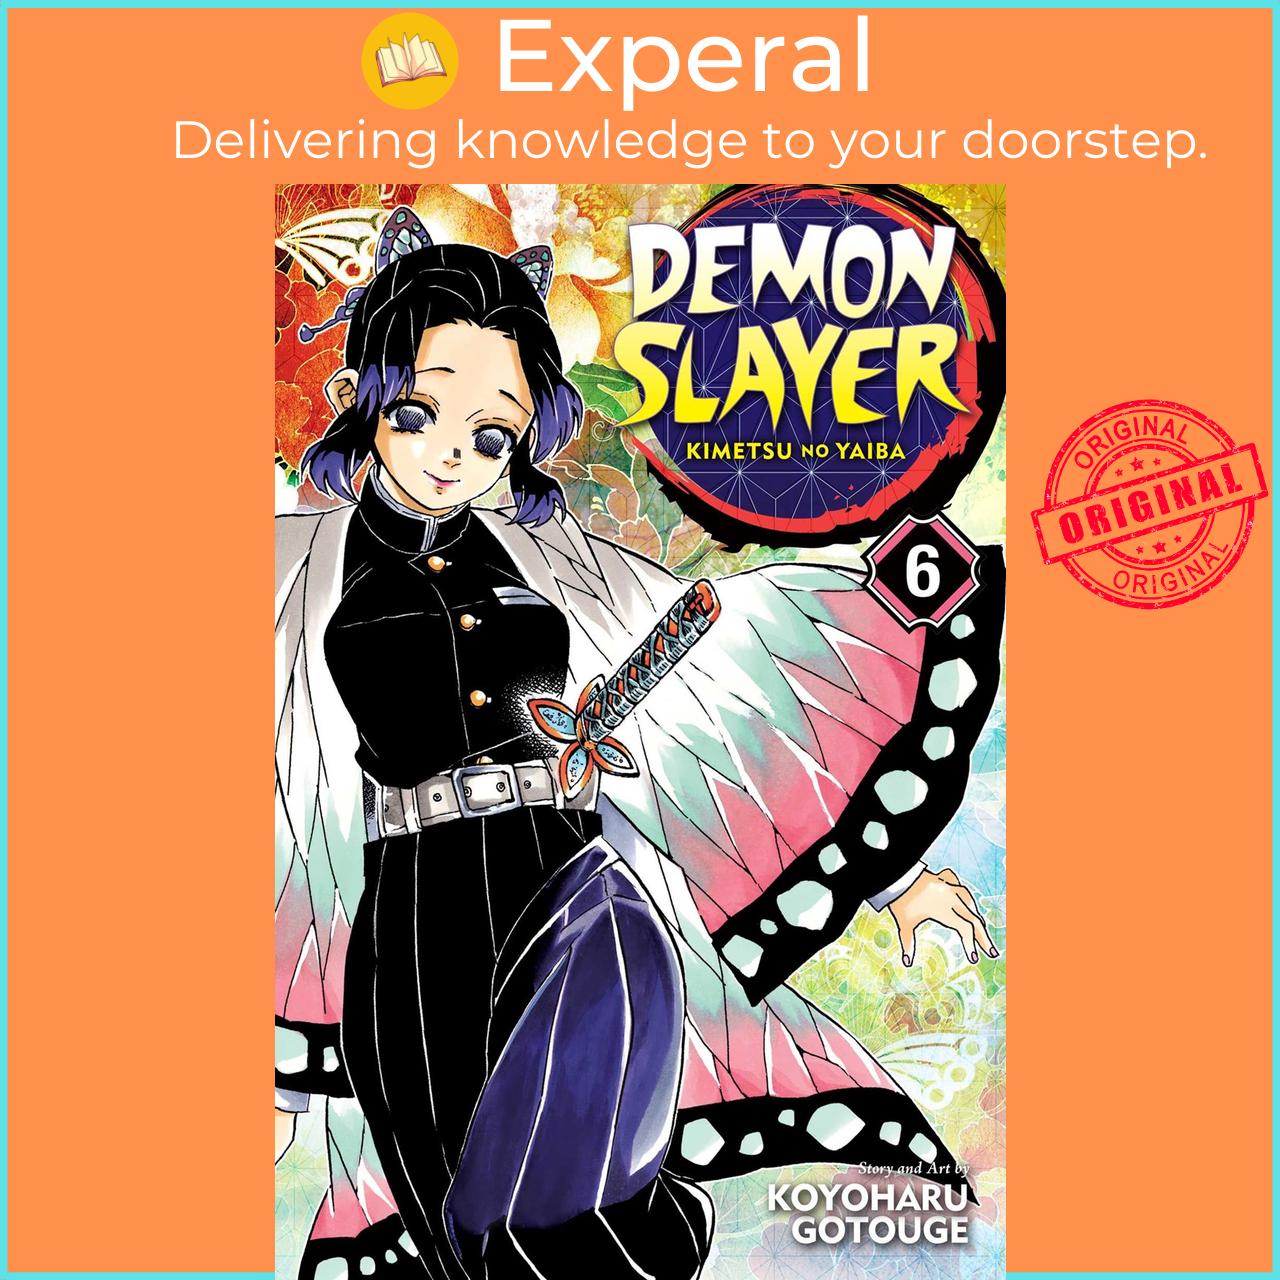 Sách - Demon Slayer: Kimetsu no Yaiba, Vol. 6 by Koyoharu Gotouge (US edition, paperback)